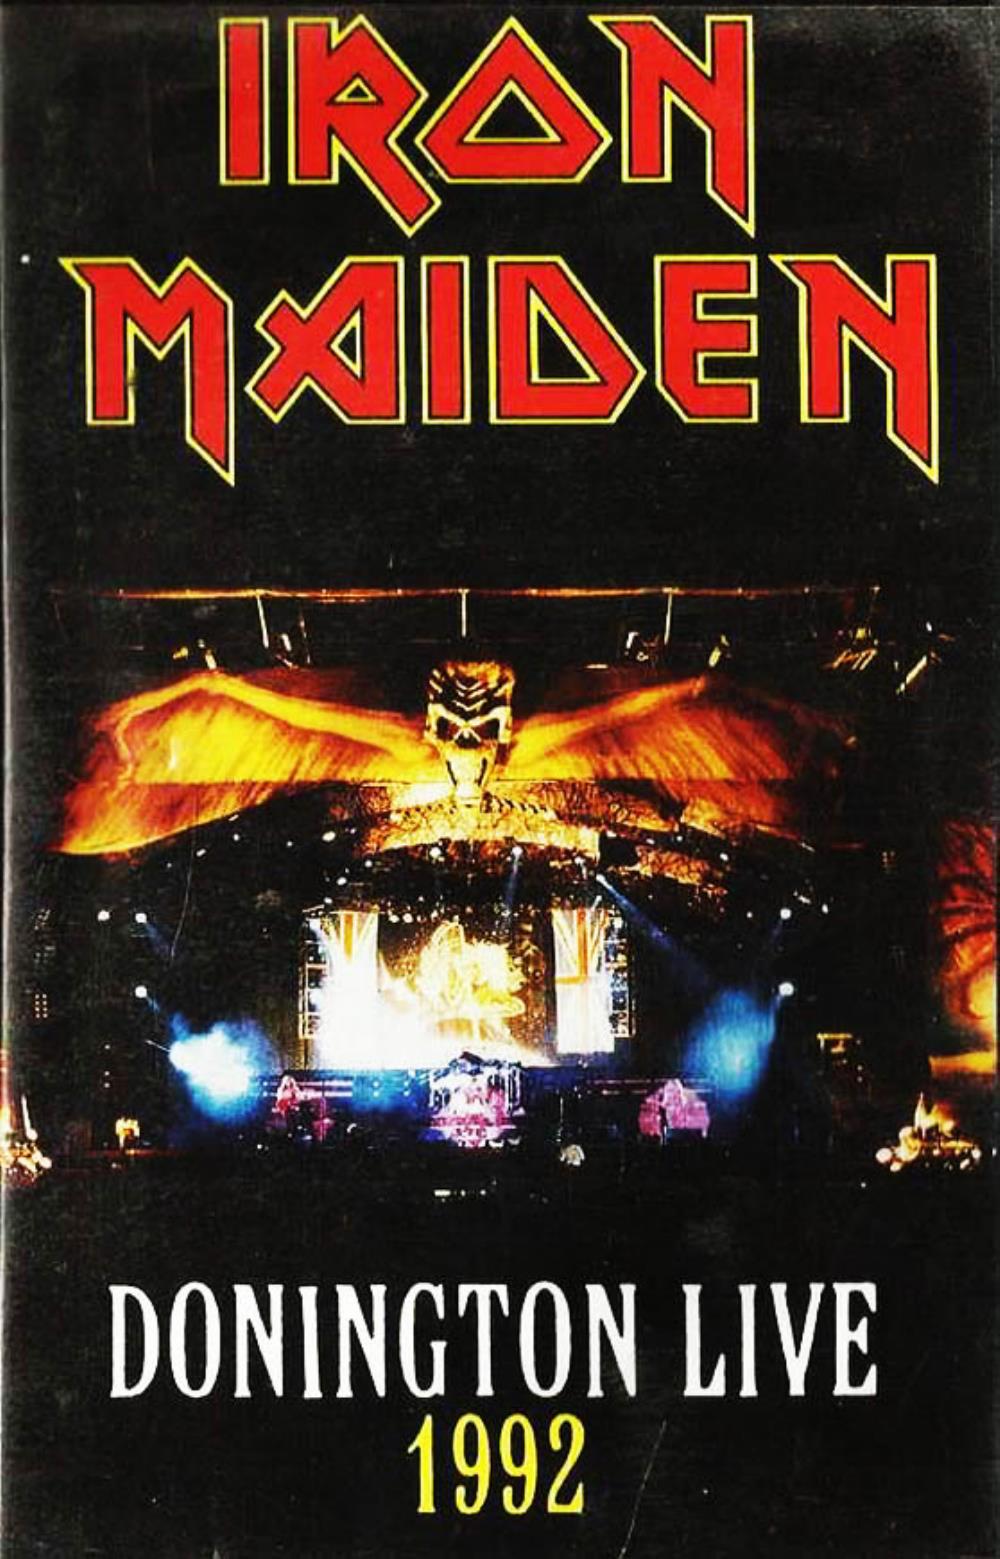 Iron Maiden Live at Donington album cover